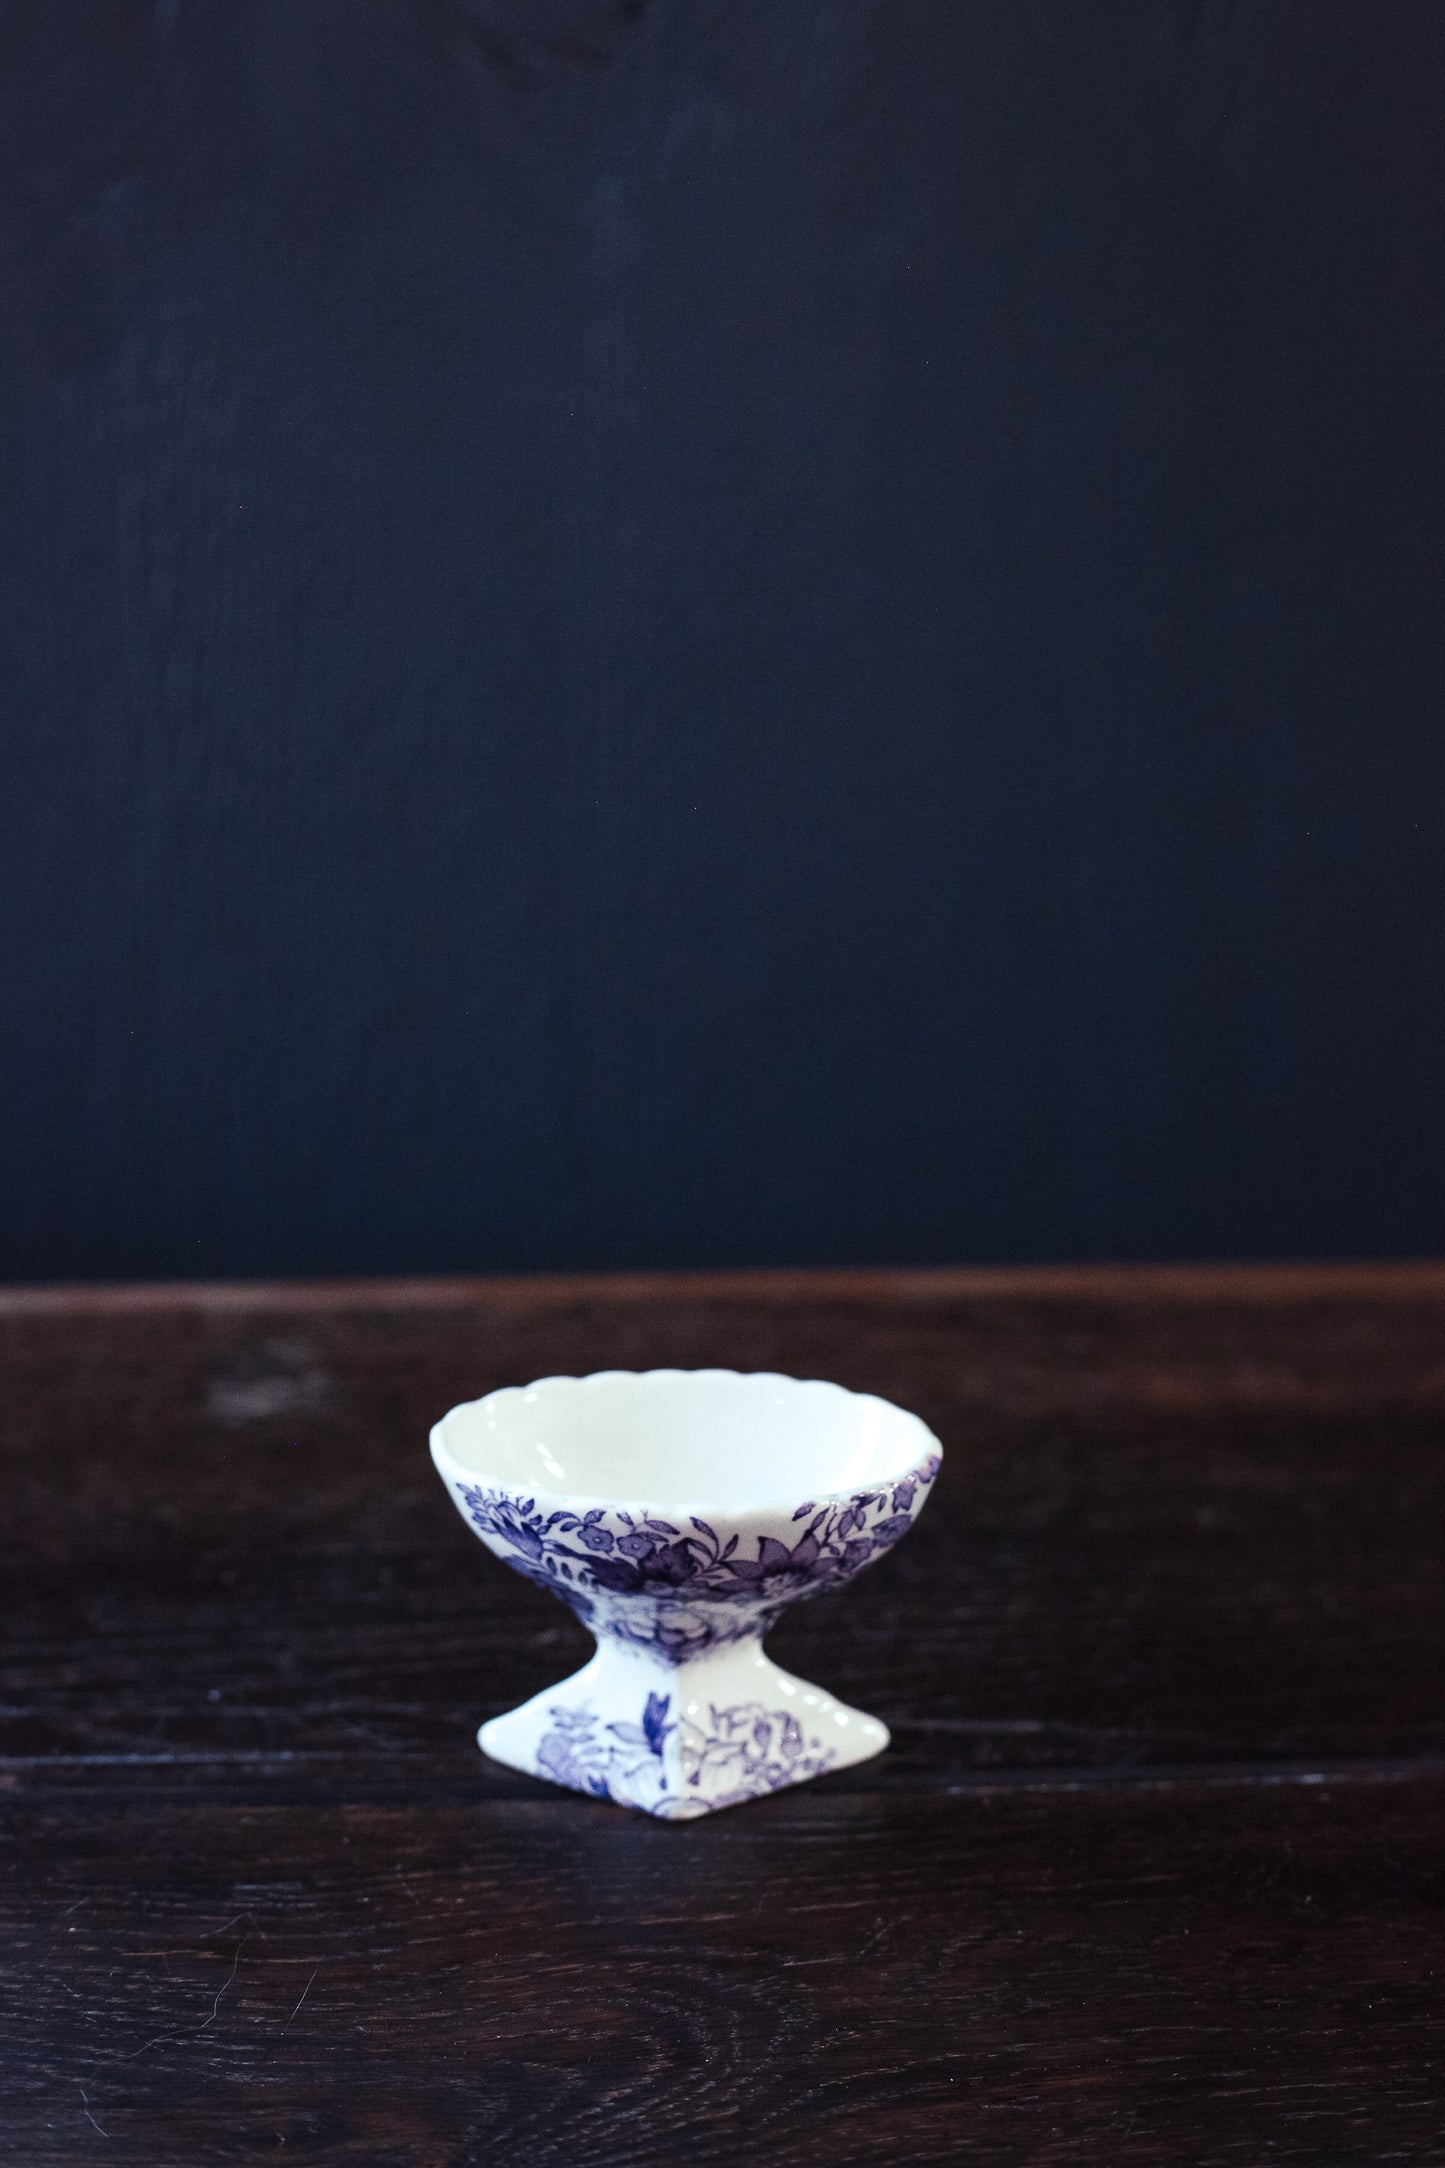 Small Purple Transfer Print Porcelain Salt Cellar - Vintage Passionflower Porcelain Footed Bowl Maling England